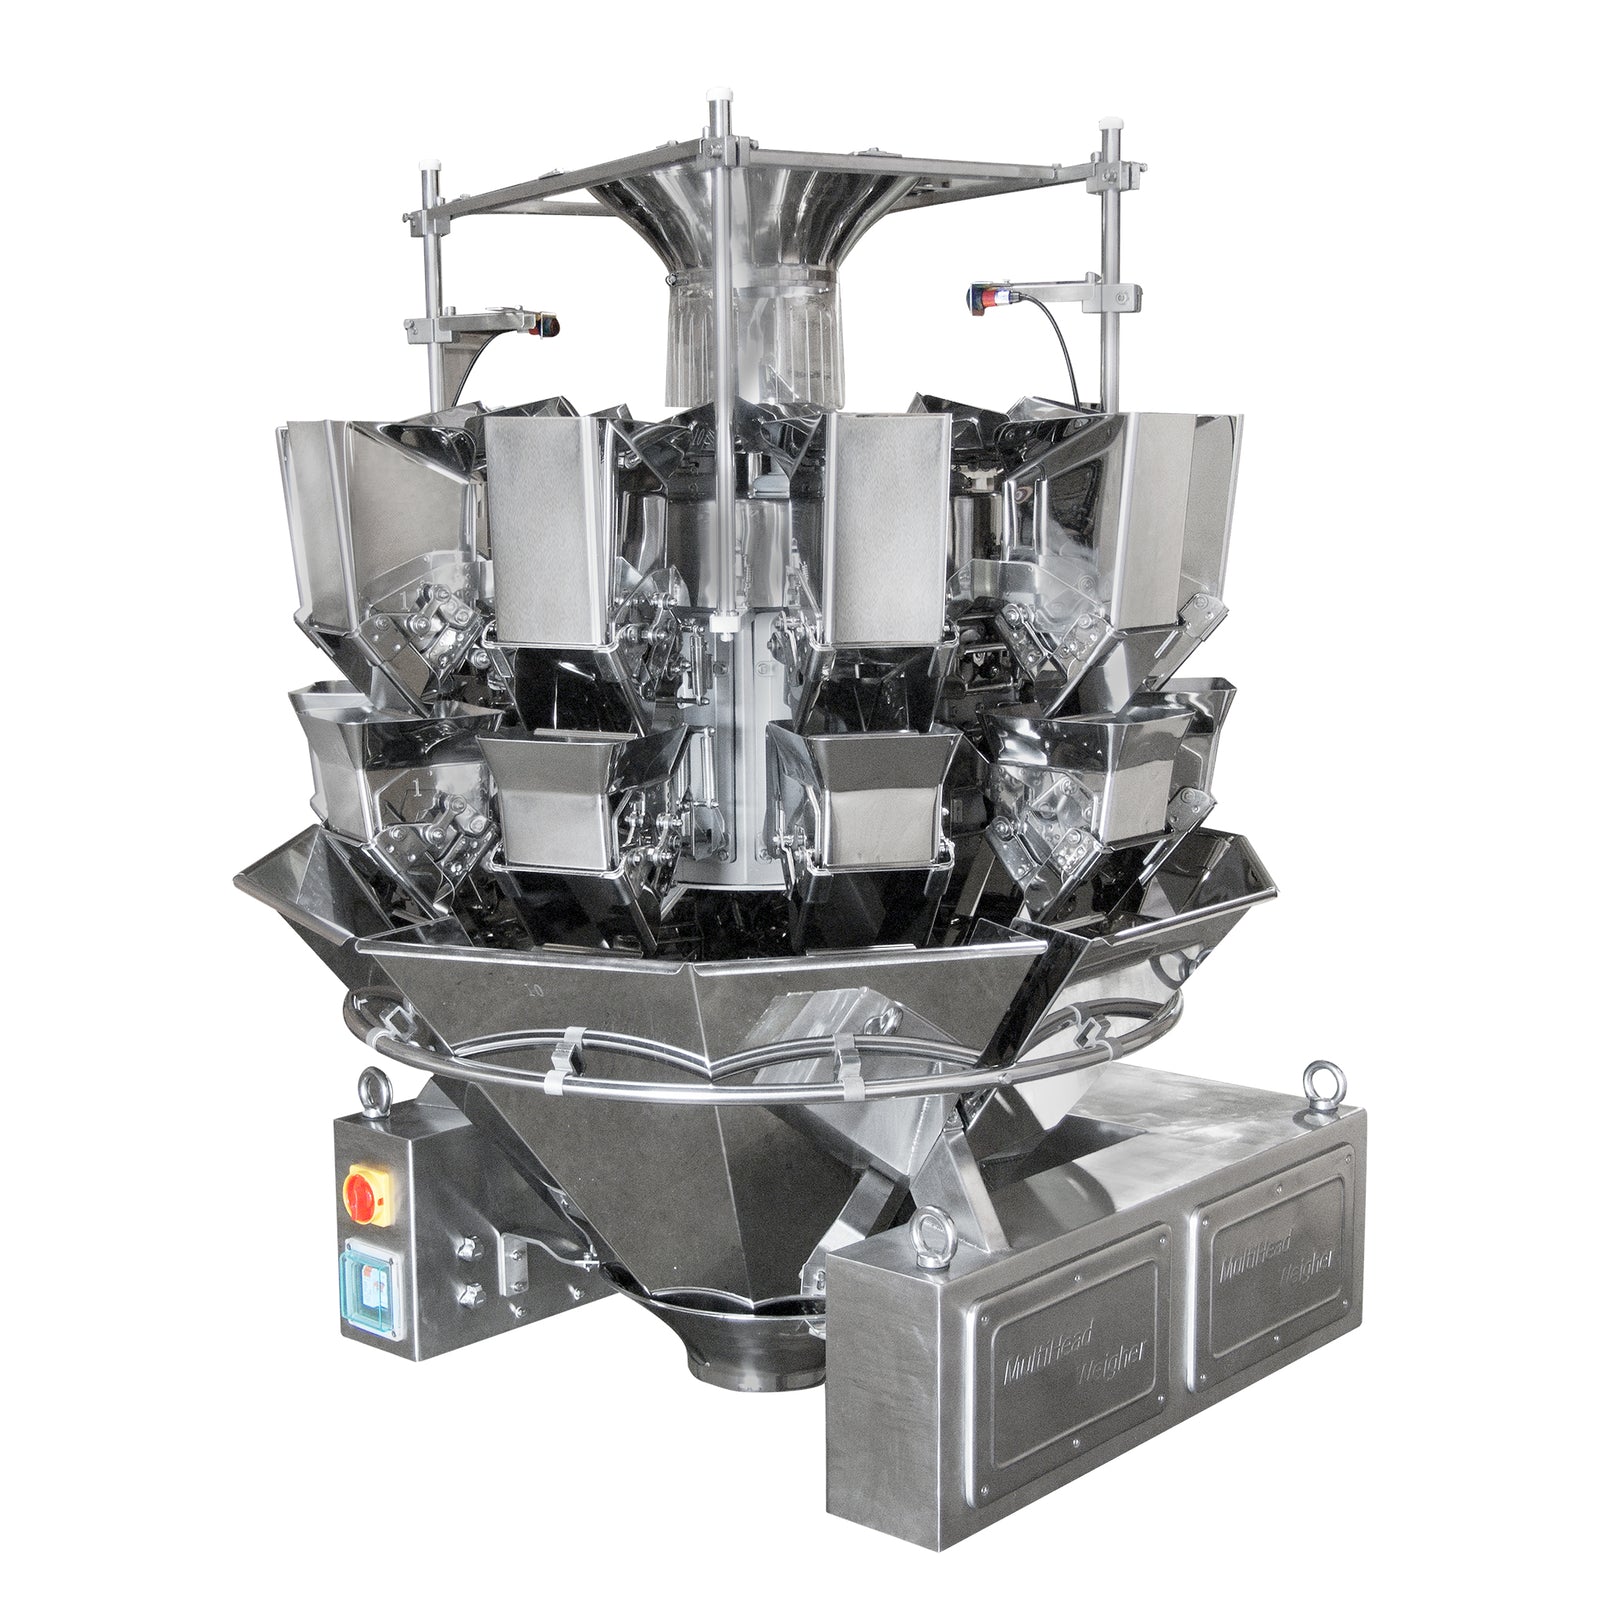 Ten heat combination weigher, weighing machine by JORES TECHNOLOGIES®